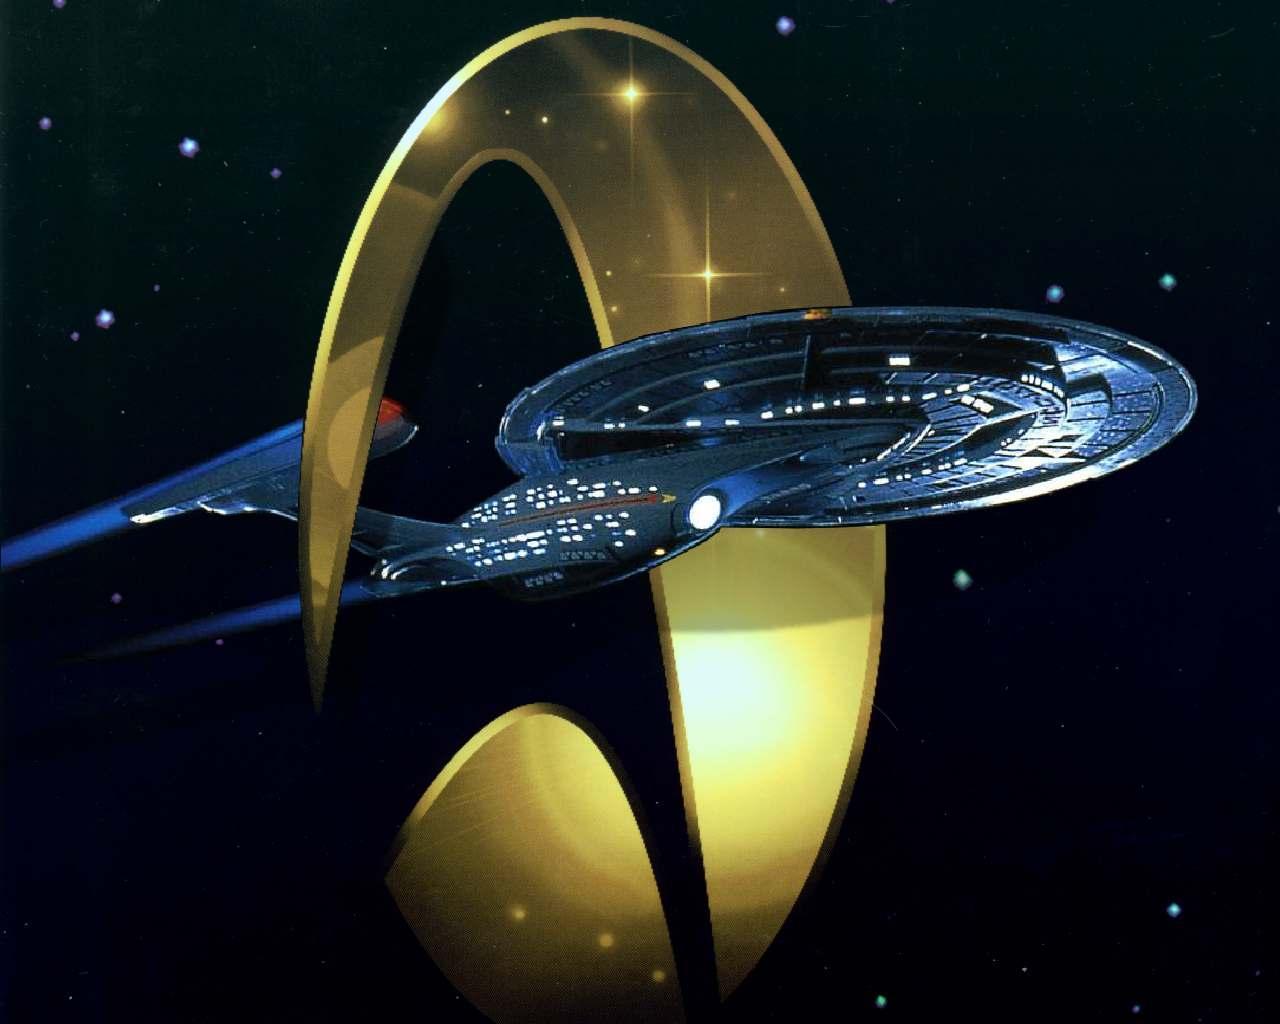 Enterprise - Star Trek-The Next Generation Wallpaper (3983042 ...